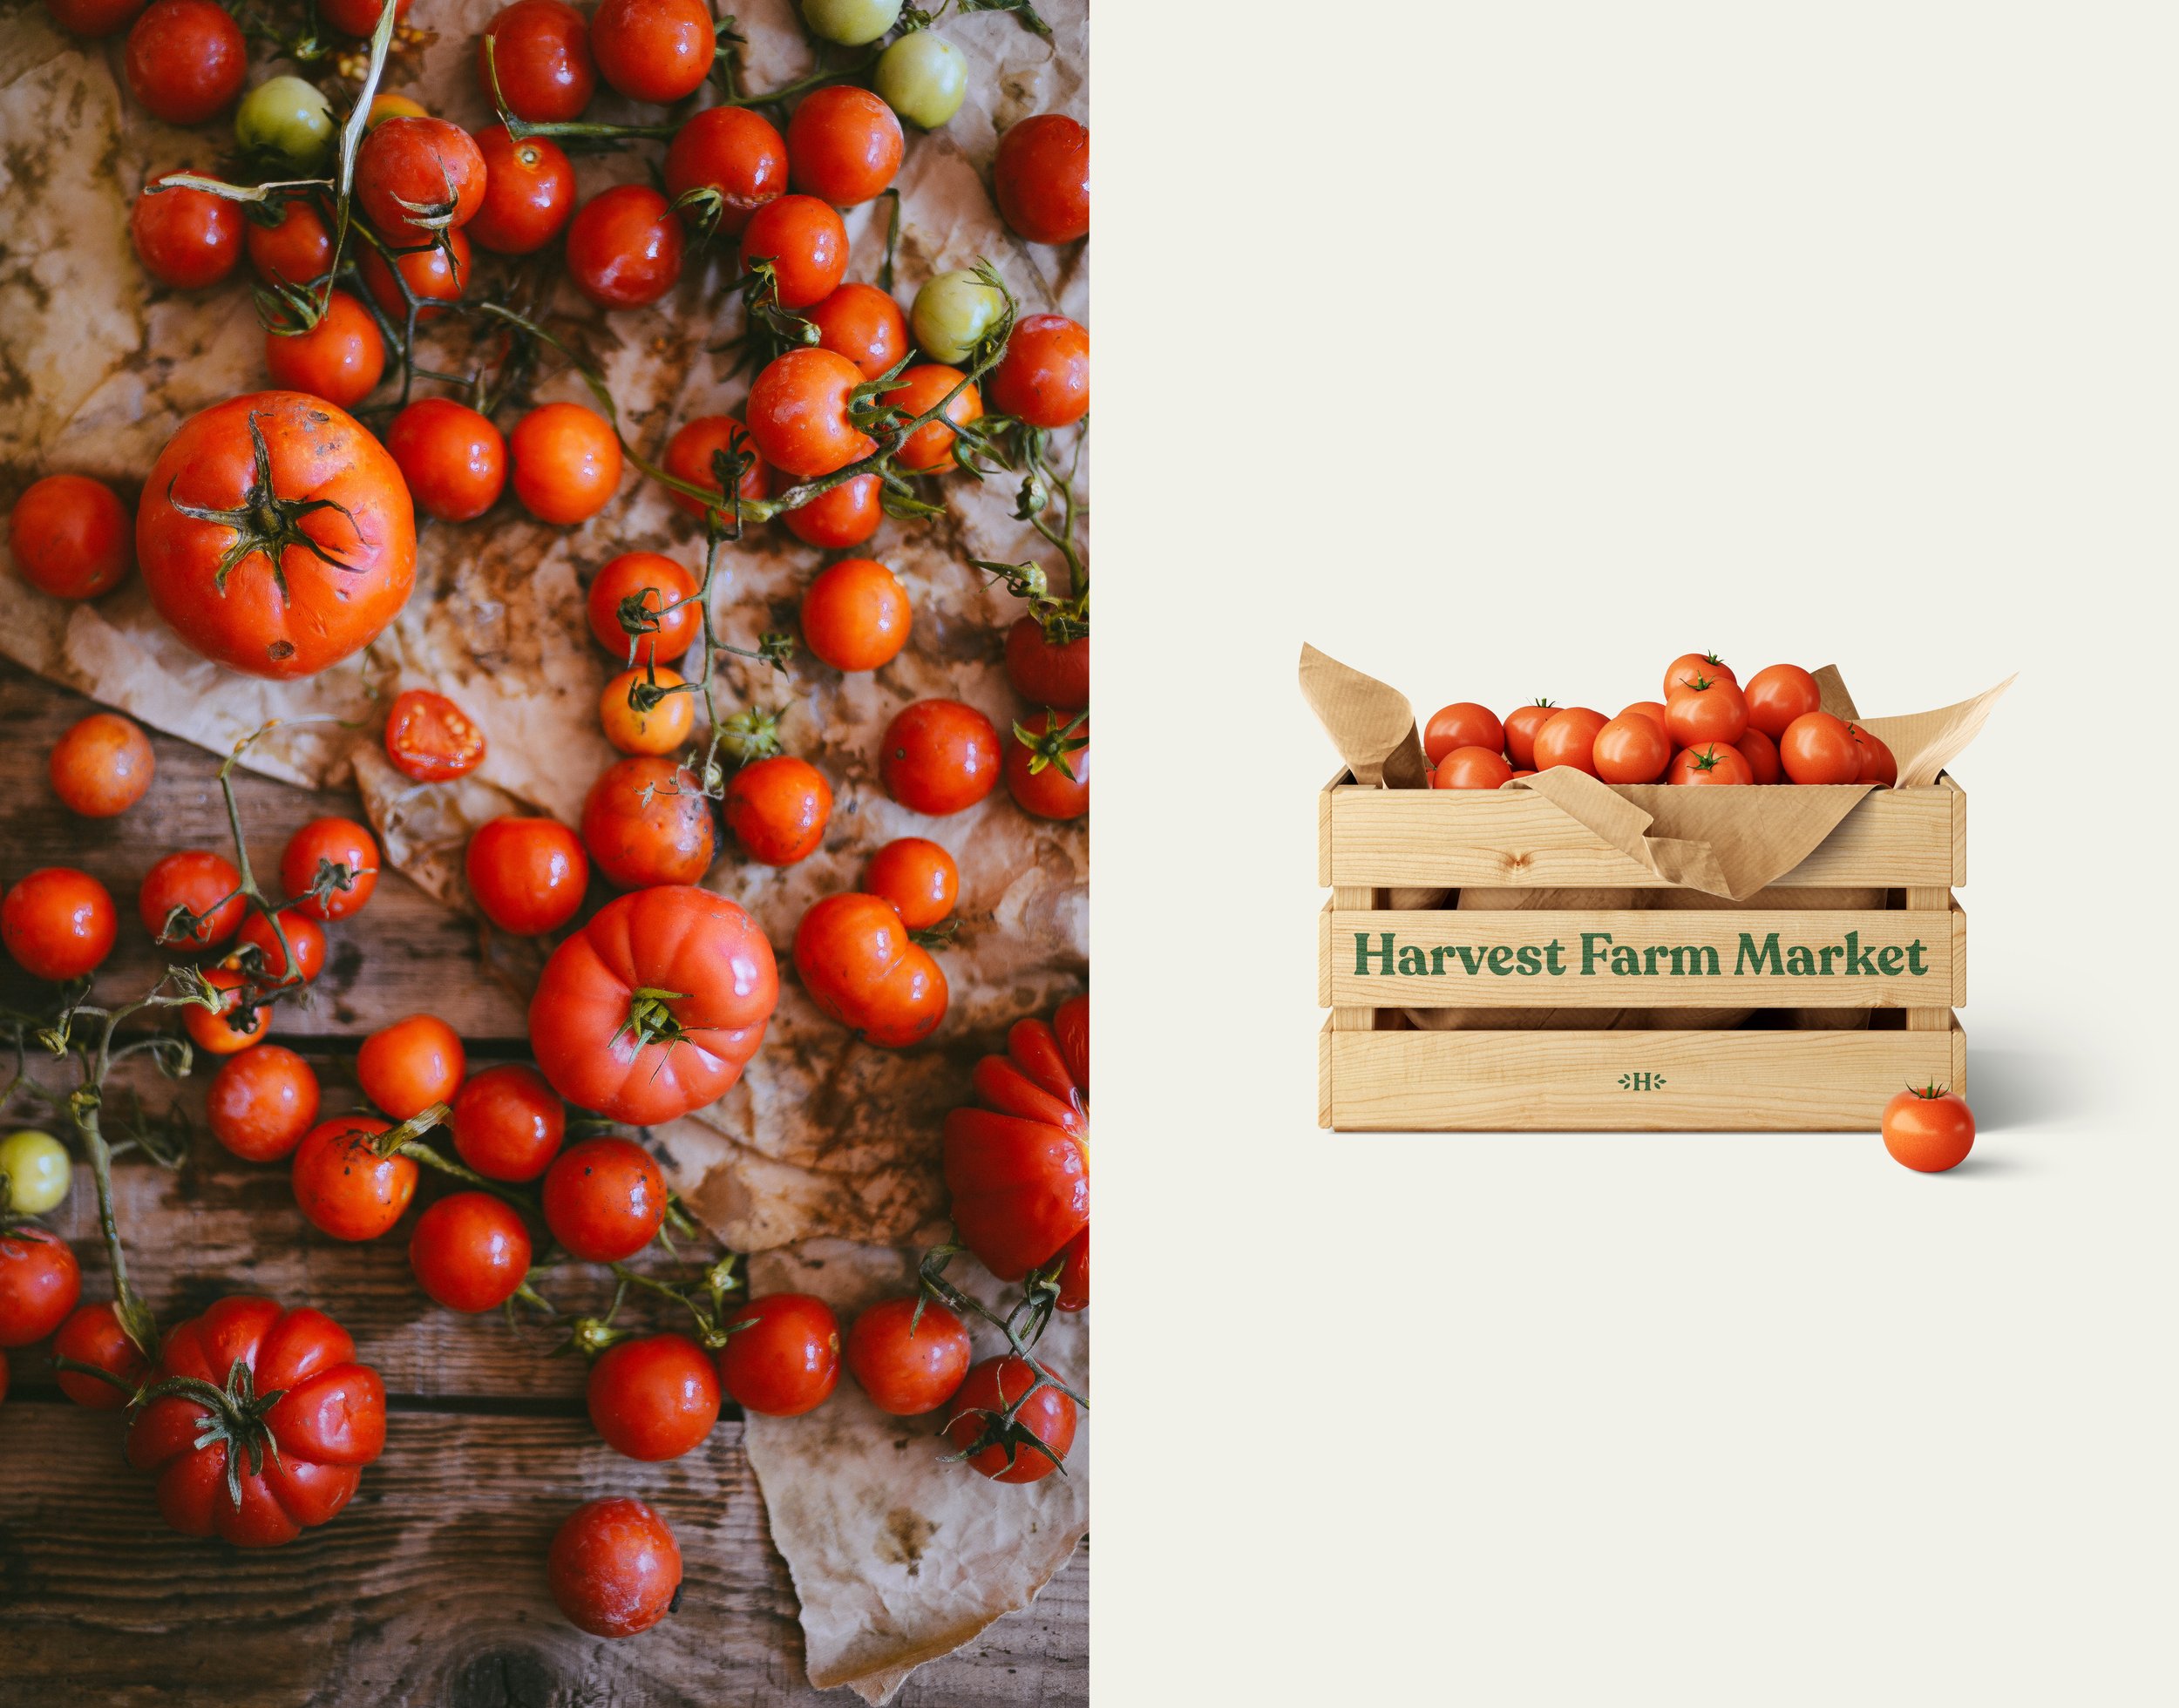 Artful-Union-Harvest-Farm-Market-Rustic-Heirloom-Tomatoes-Wooden-Farm-Crate-Design.jpg